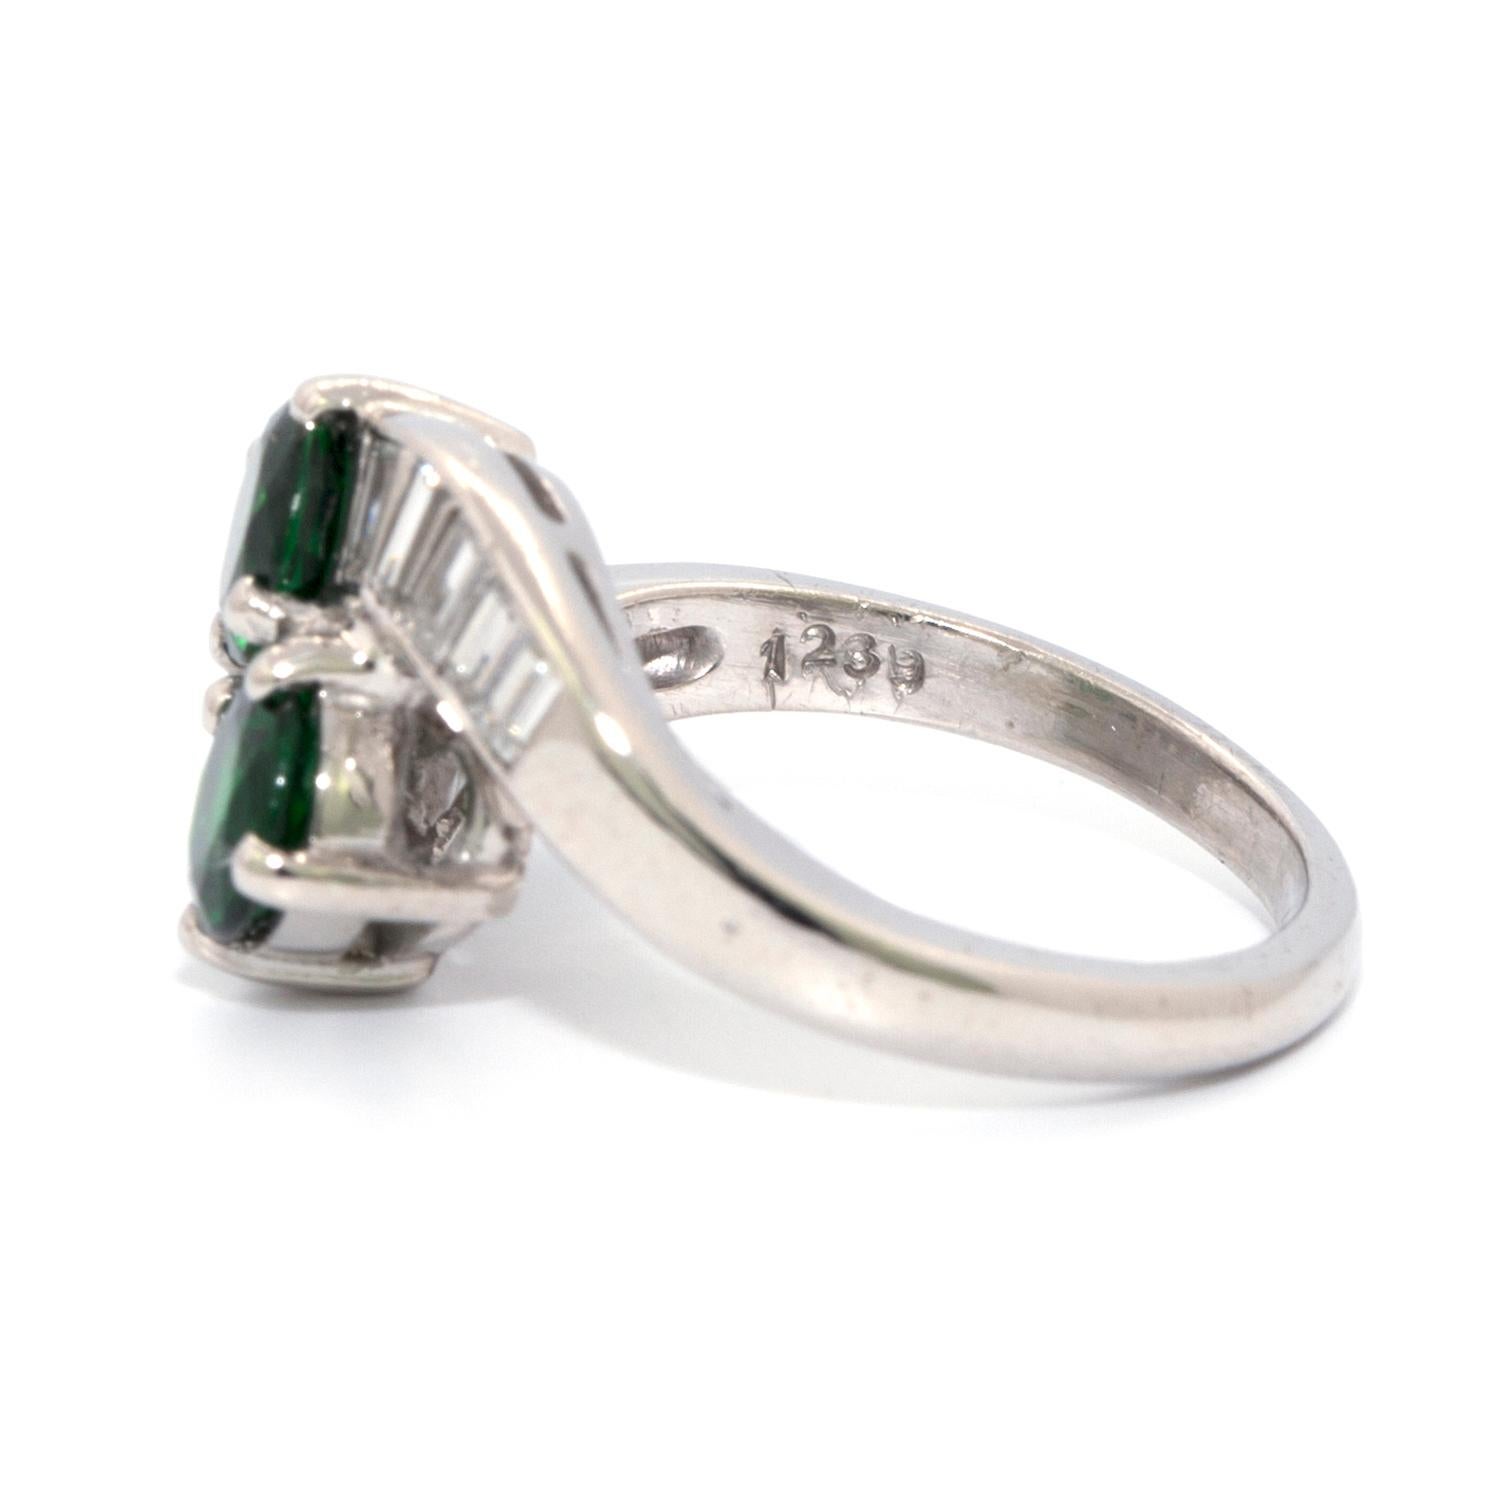 Round Cut Tsavorite Garnet and Diamond Ring That Features 2 Round Tsavorite Garnets  For Sale